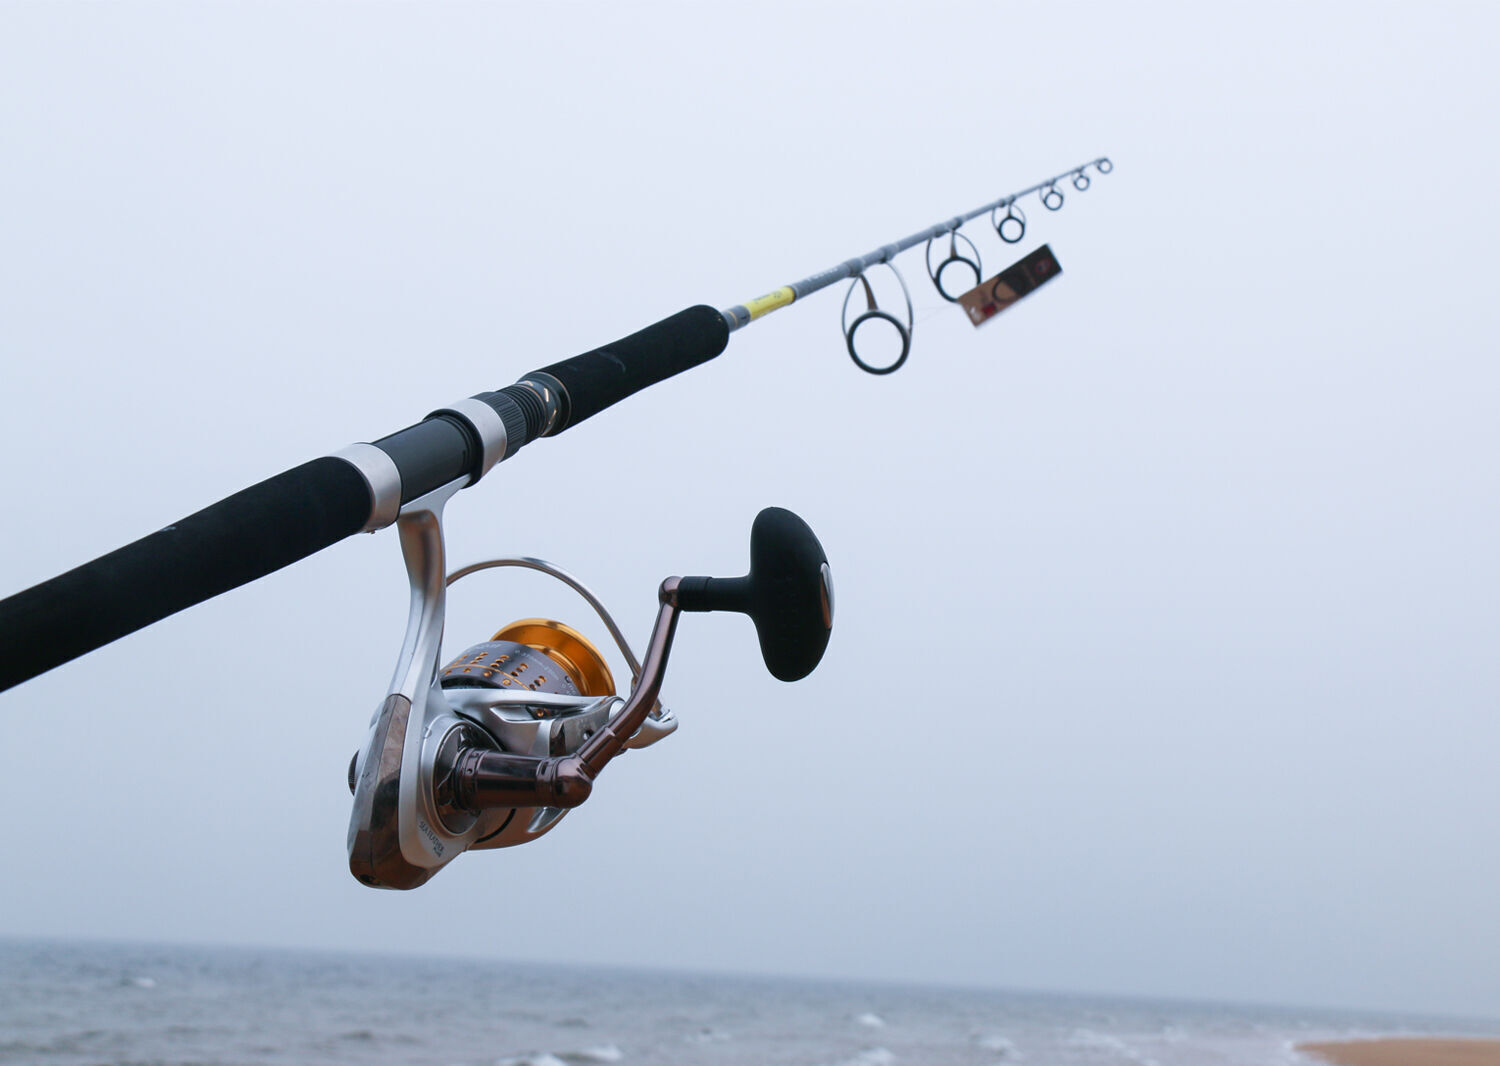 Clearance Sales Ecooda Online E Series Jigging Rod Fishing Rod